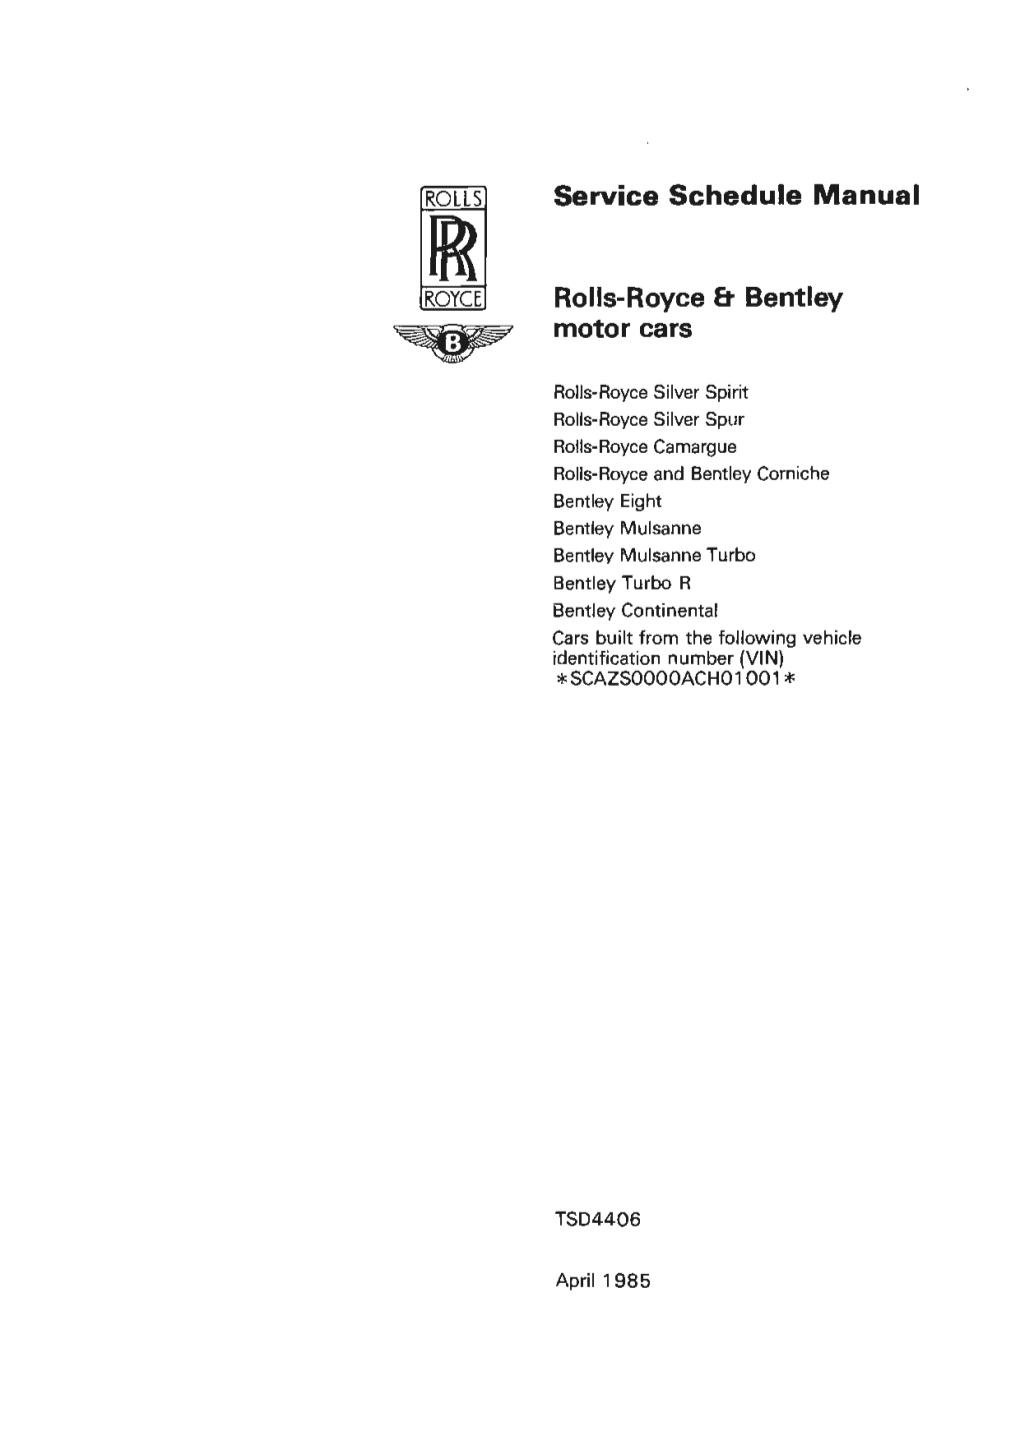 Service Schedule Manual JR ROYCE Rolls-Royce & Bentley Motor Cars